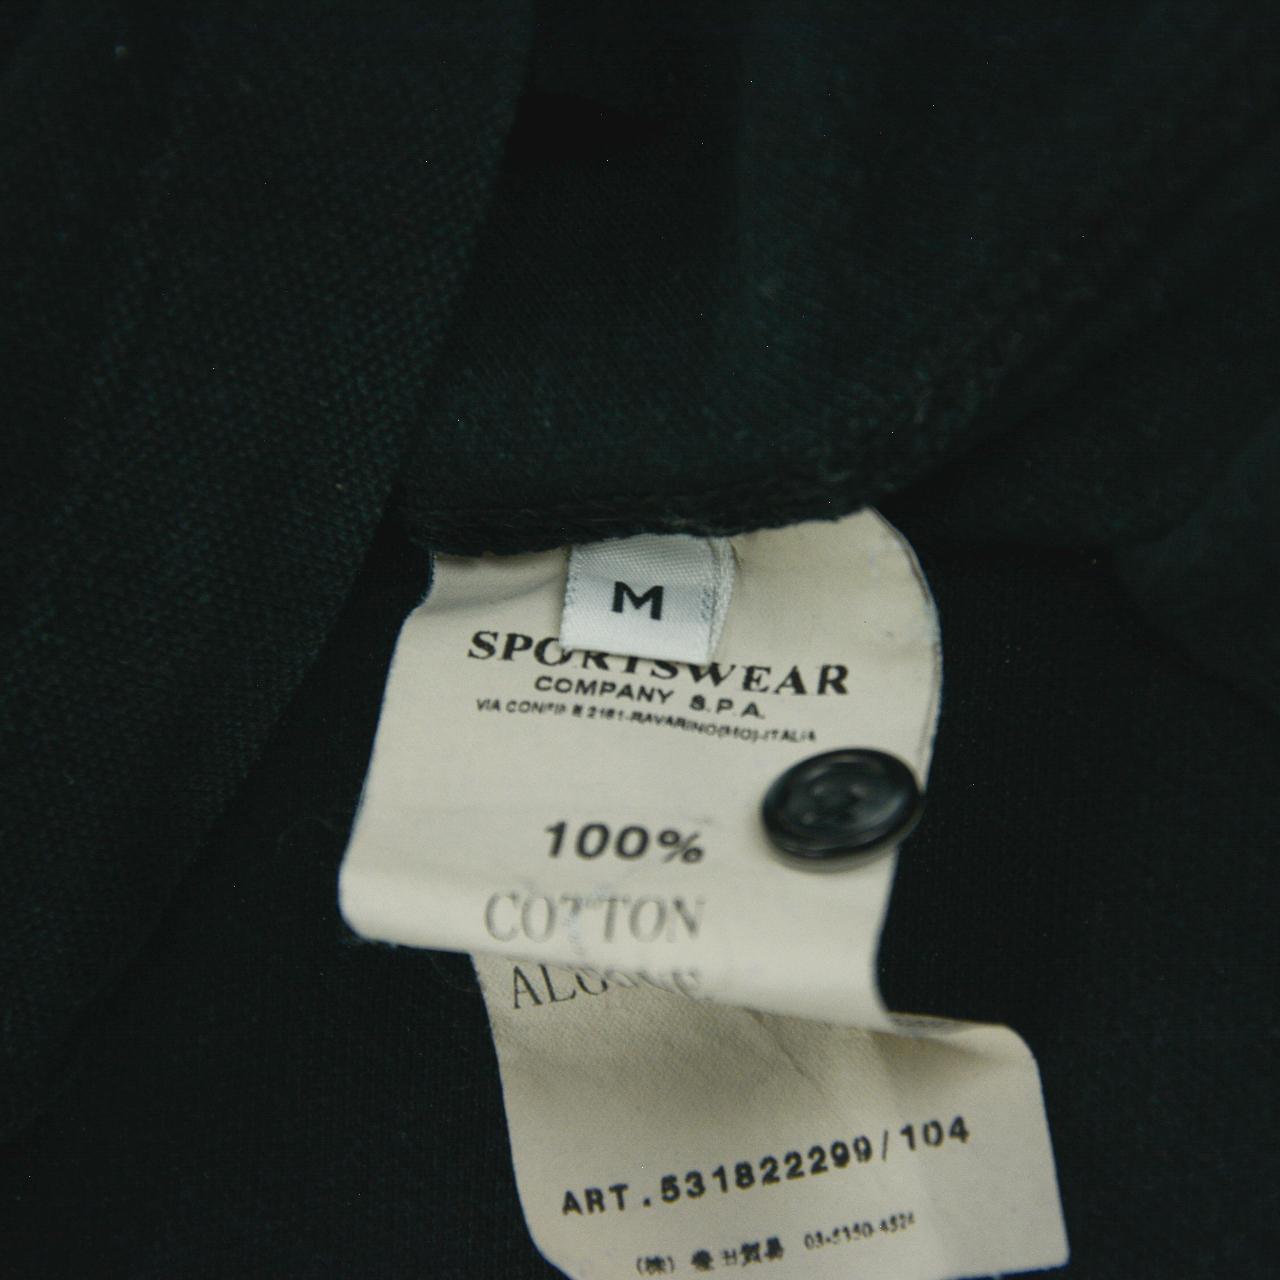 Vintage CP Company Long Sleeve Polo Shirt Size S